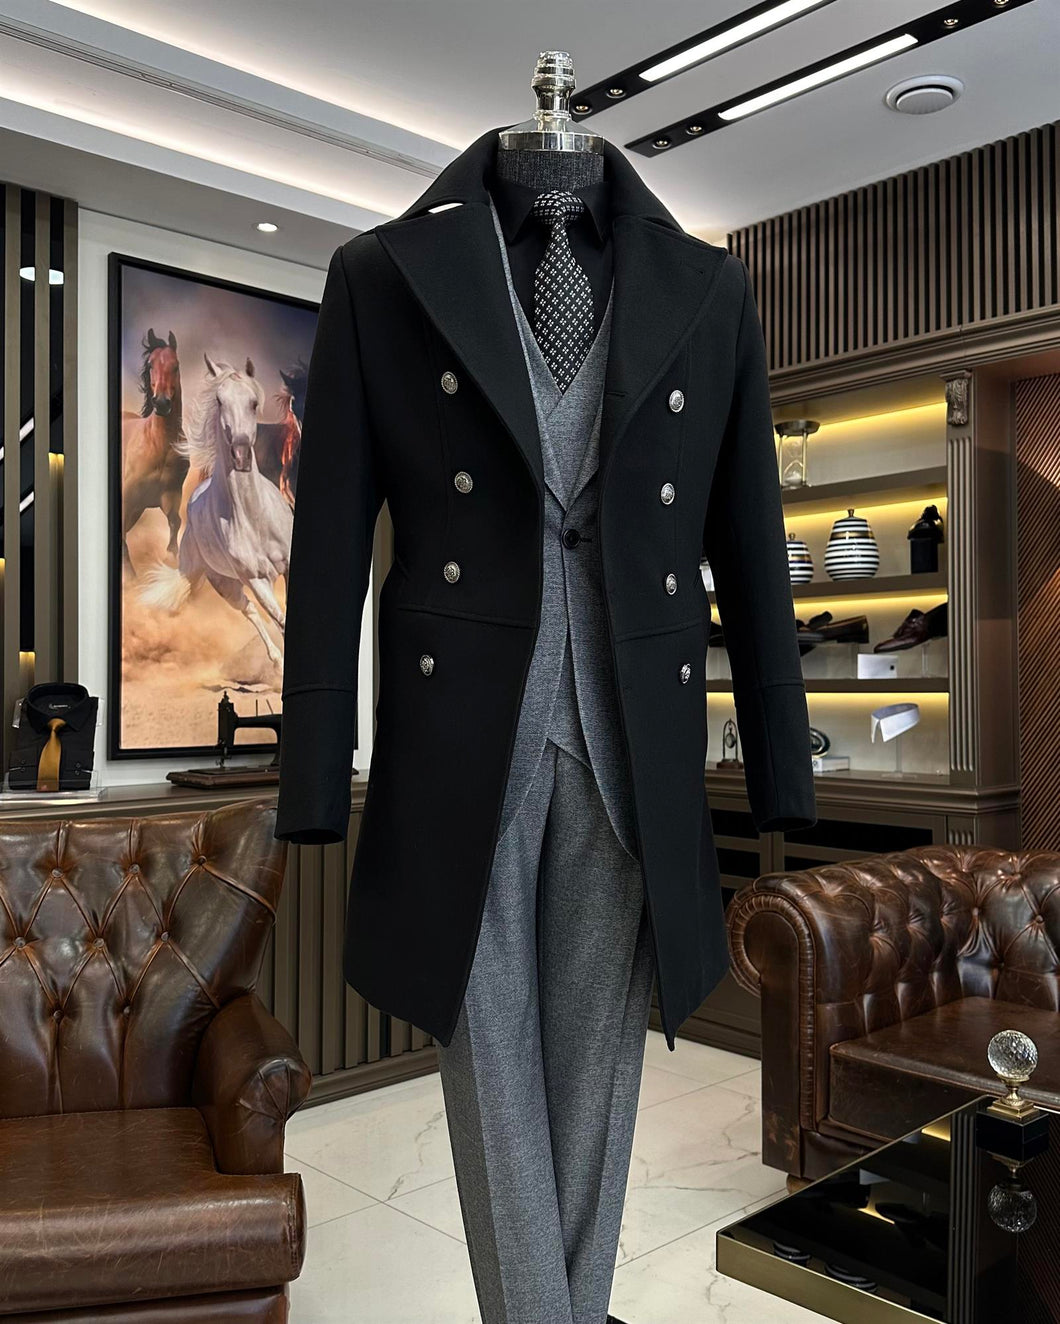 Alaska Double-Breasted Slim Fit Black Coat